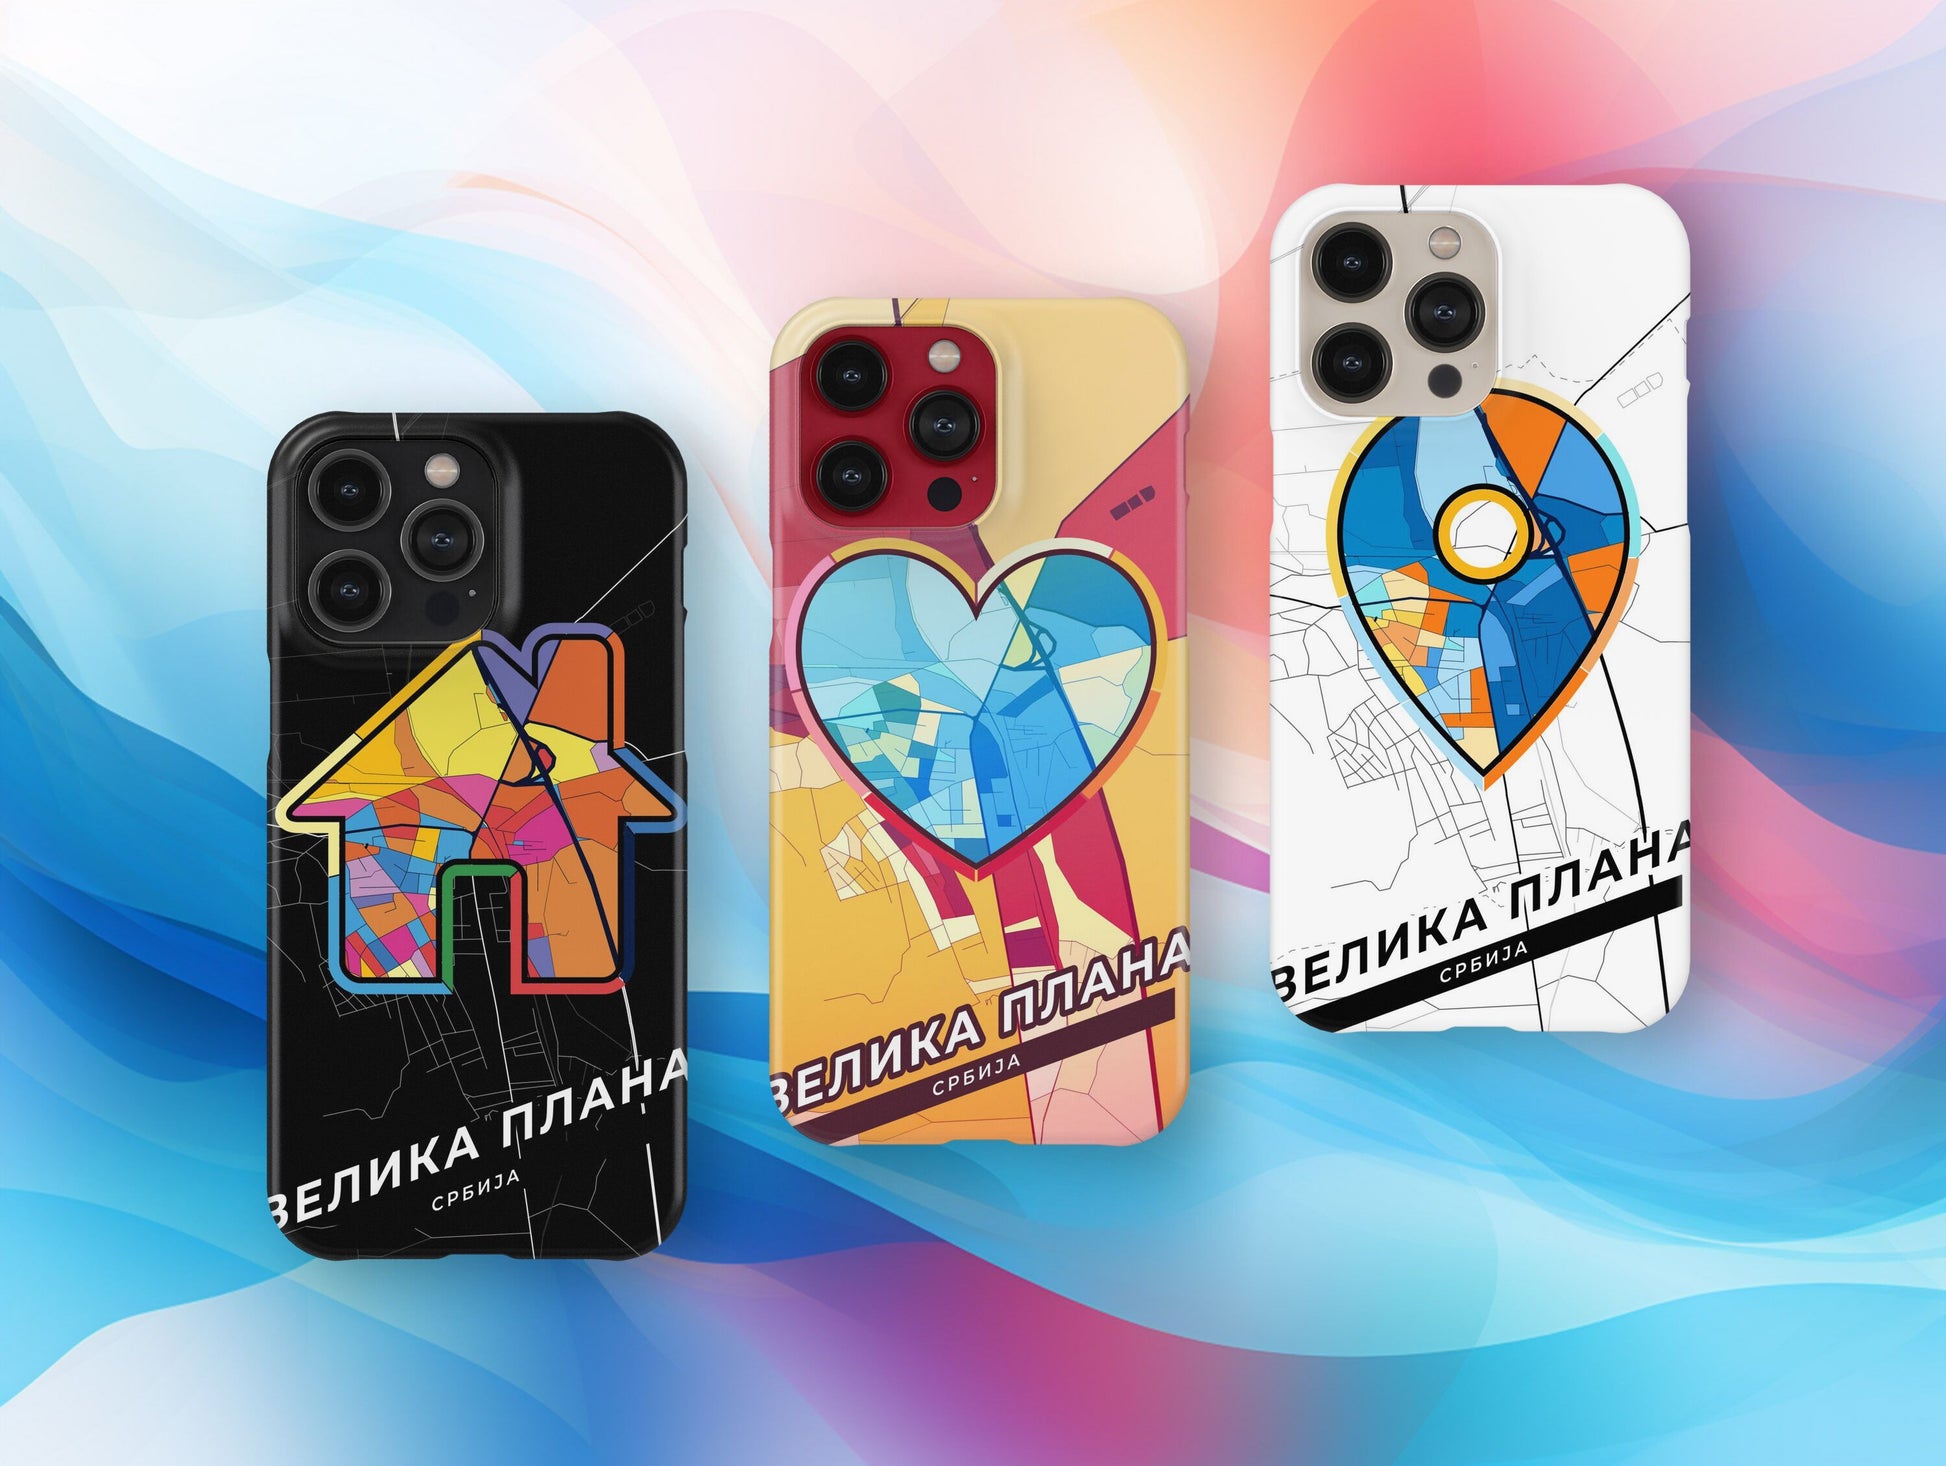 Velika Plana Serbia slim phone case with colorful icon